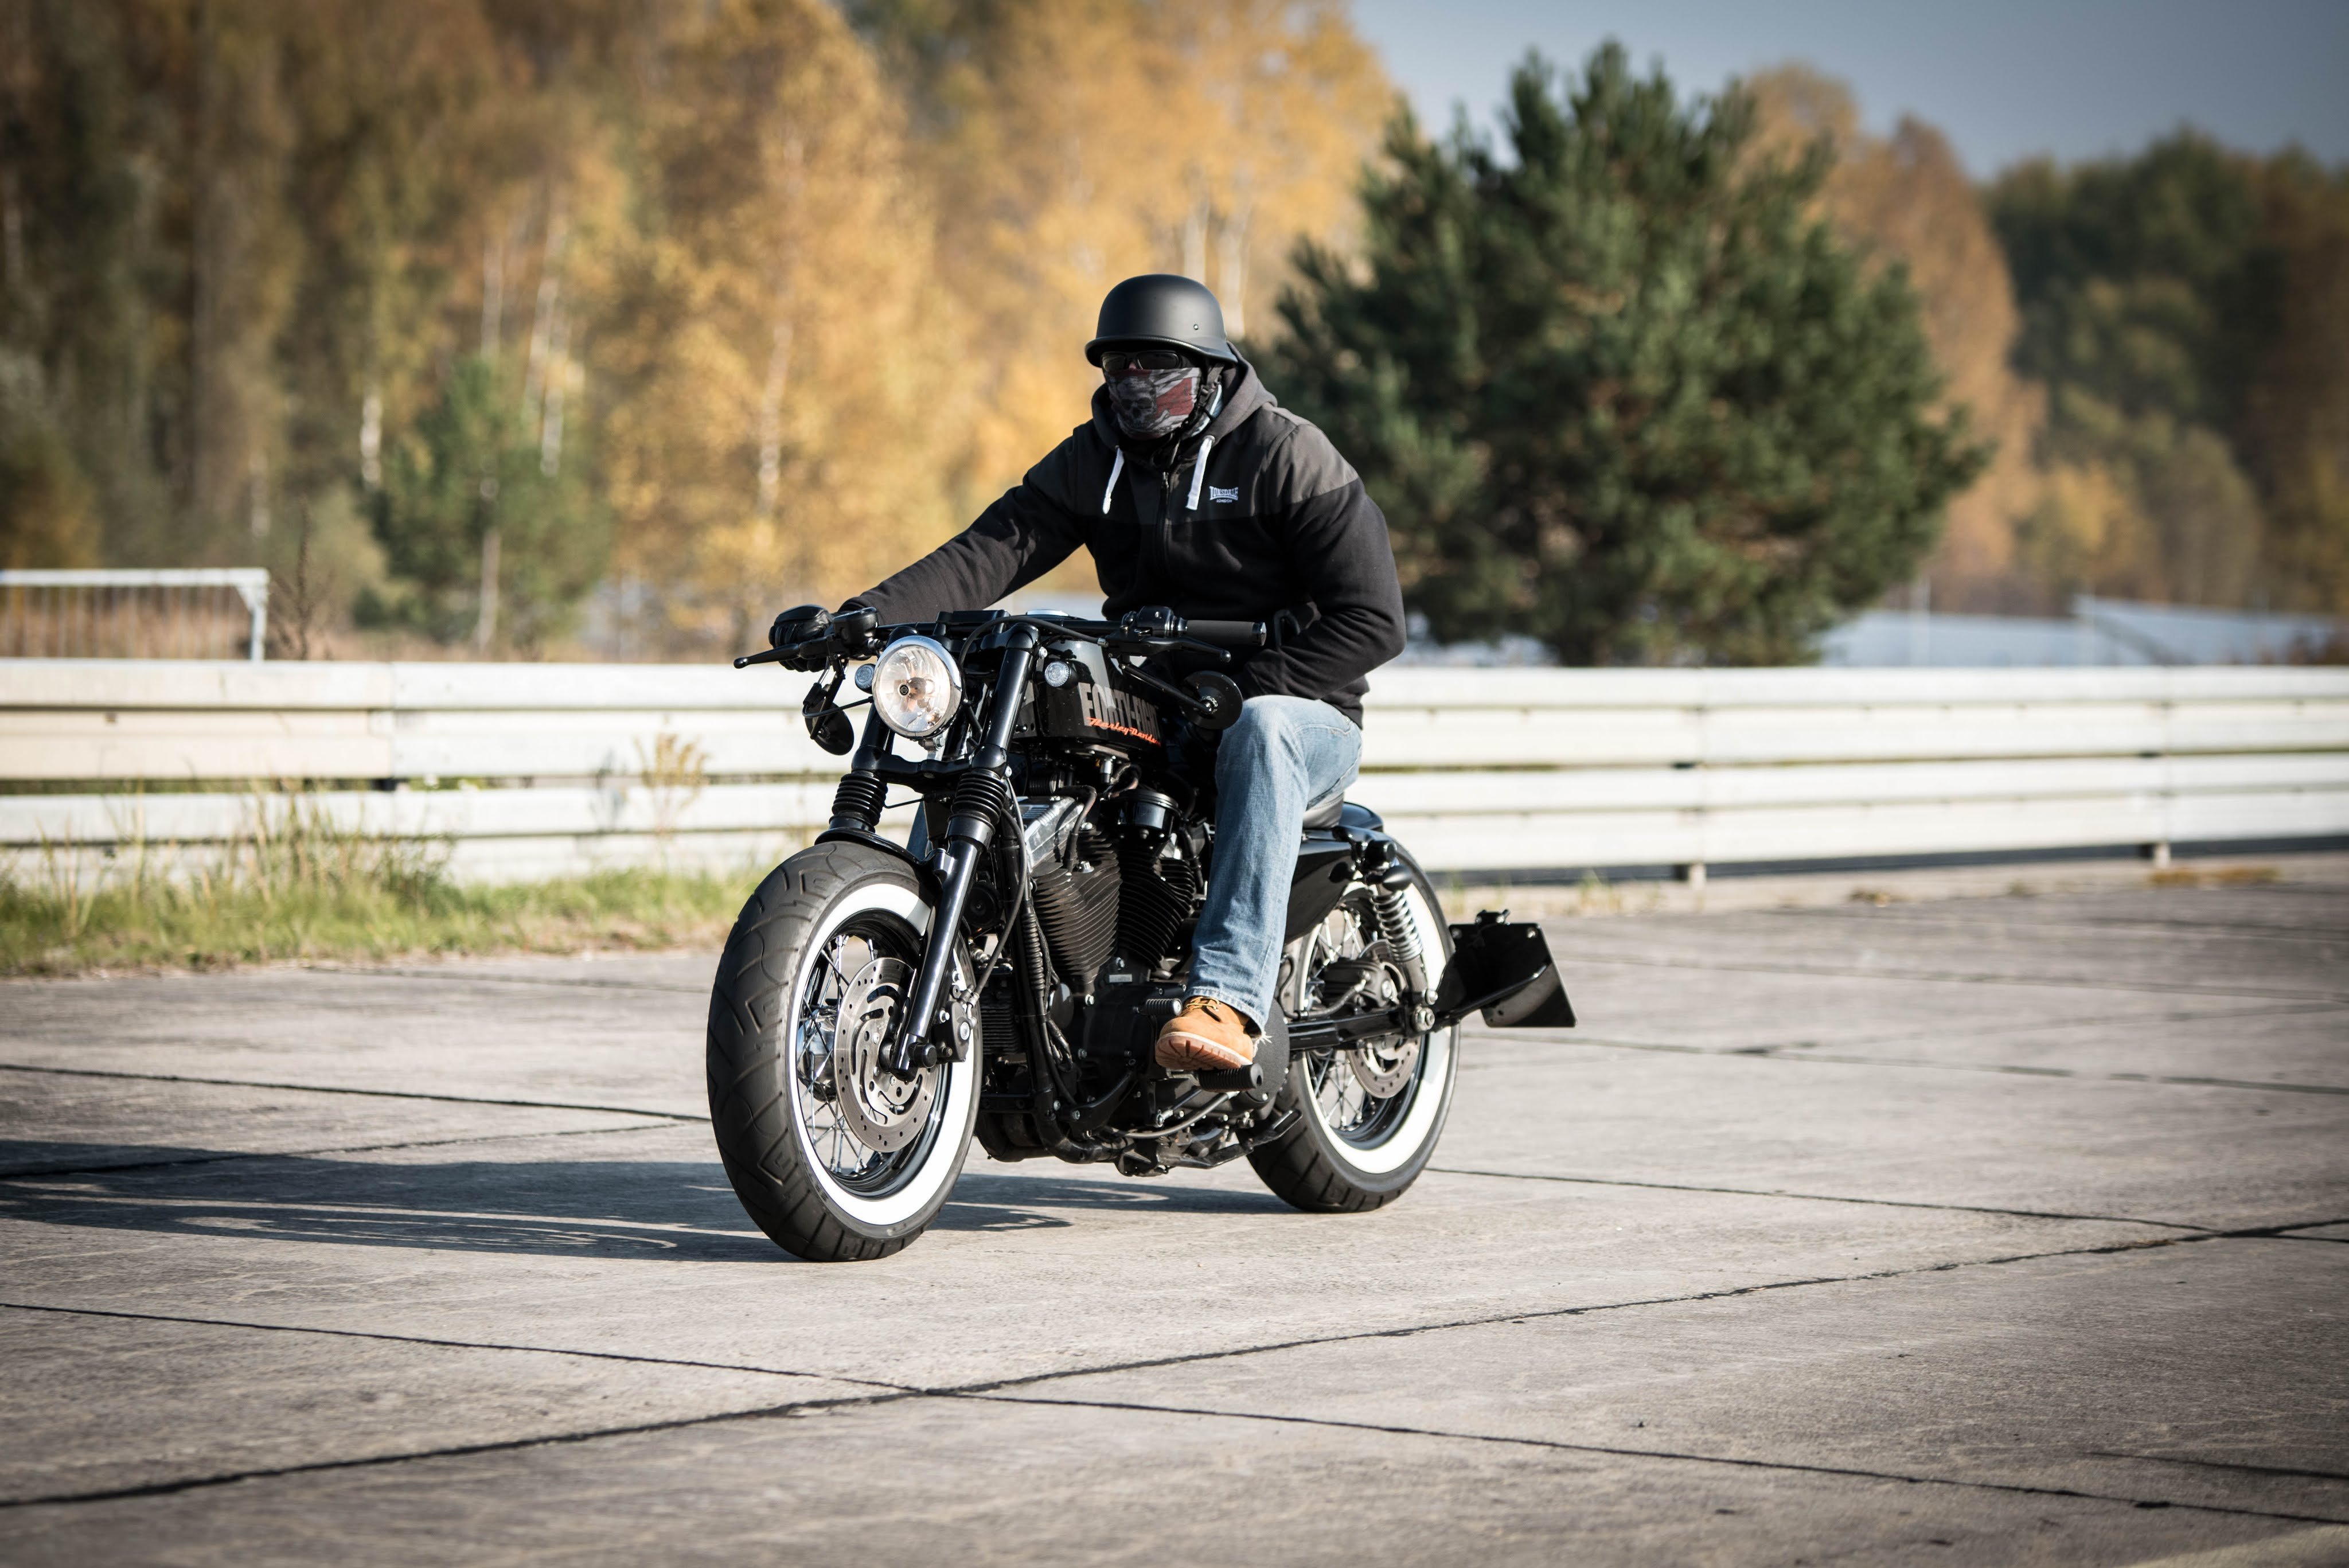 Harley Davidson Sportster riding